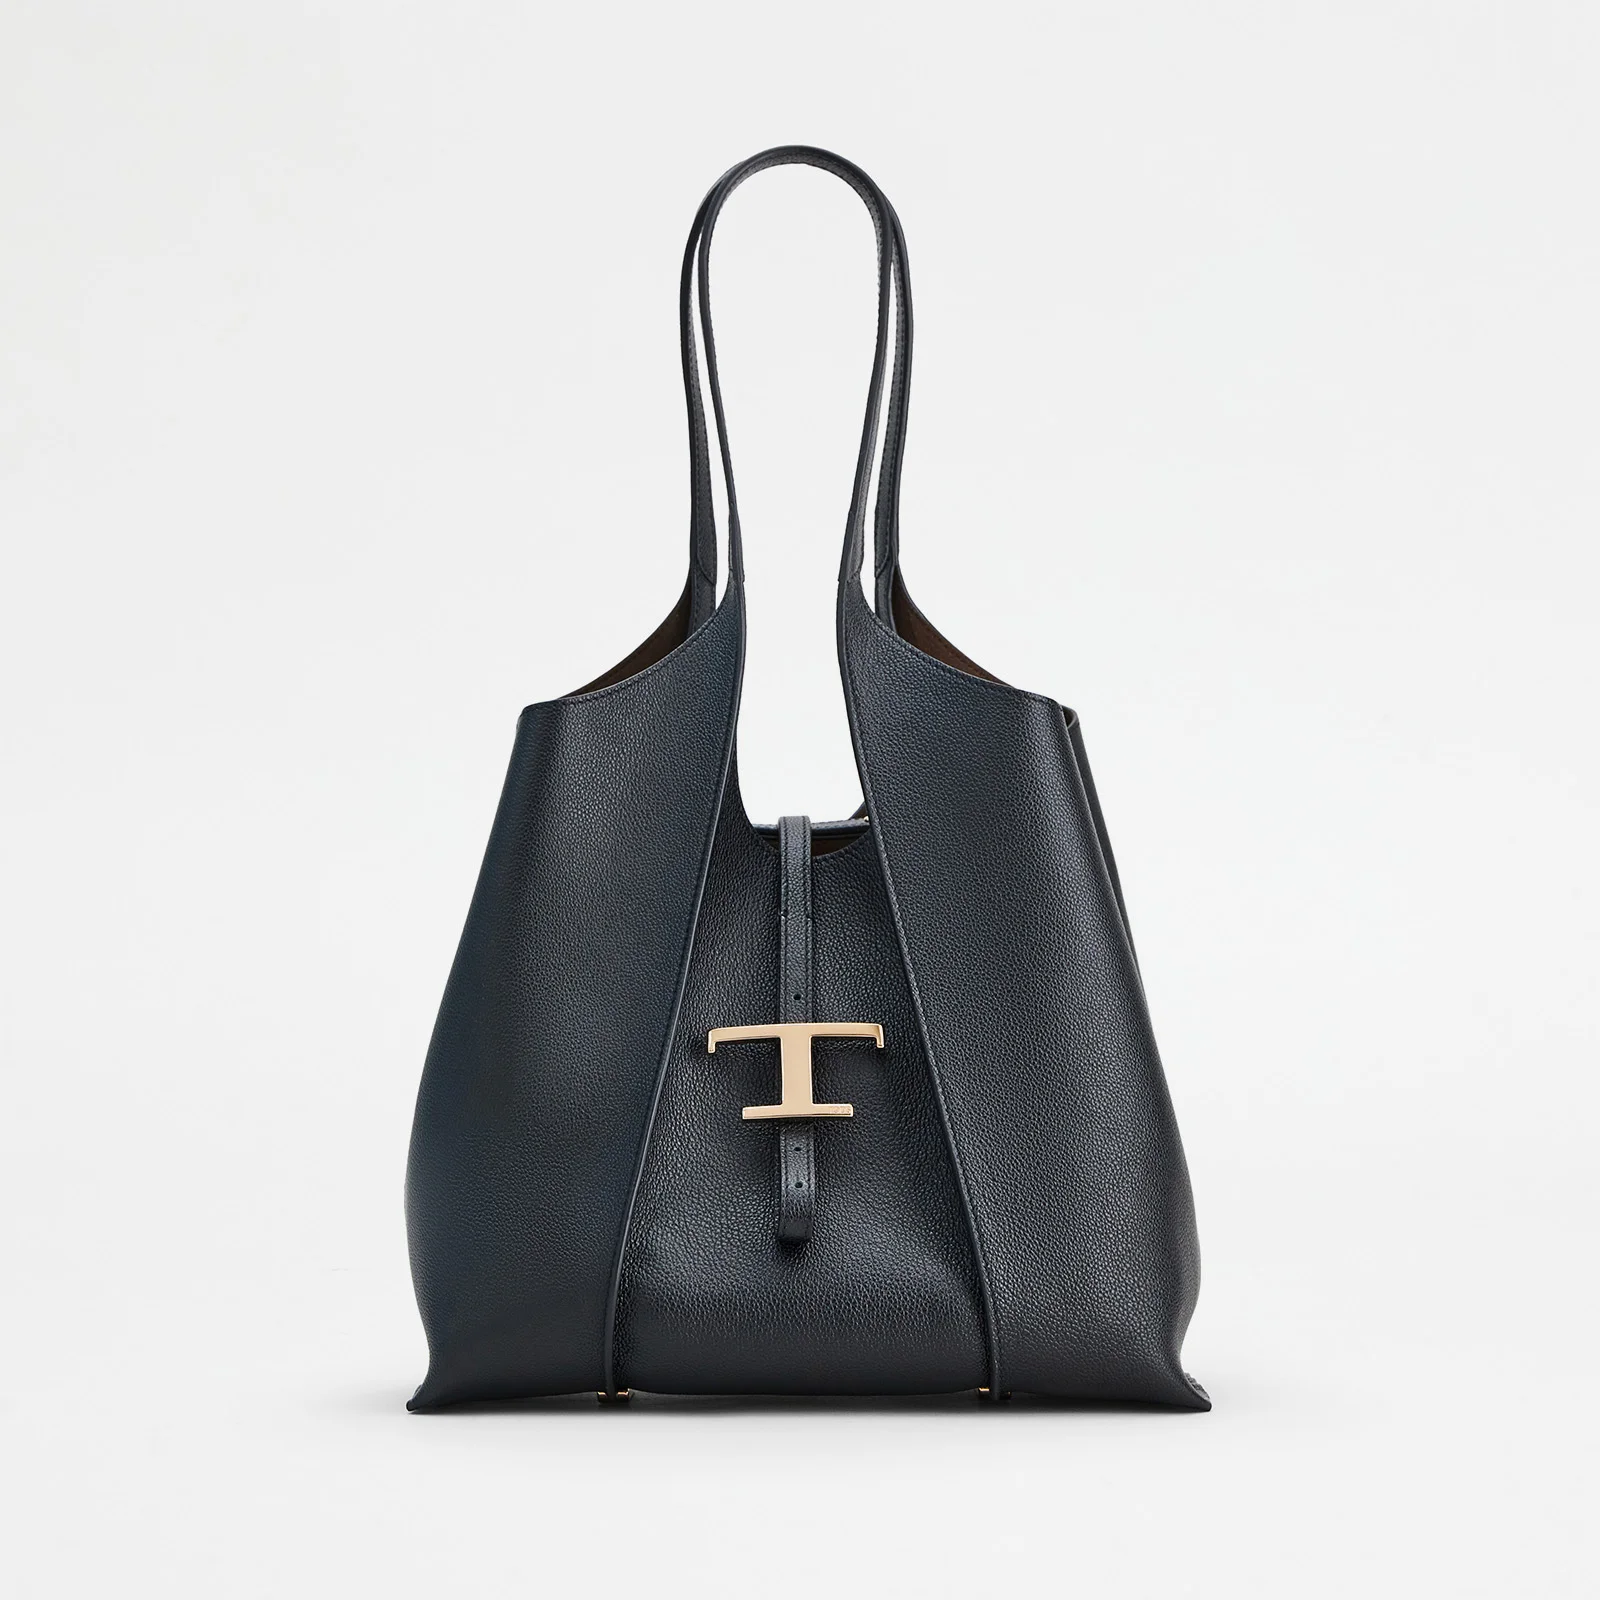 Tod's Women's T Hobo Tote Bag - Black Image 1